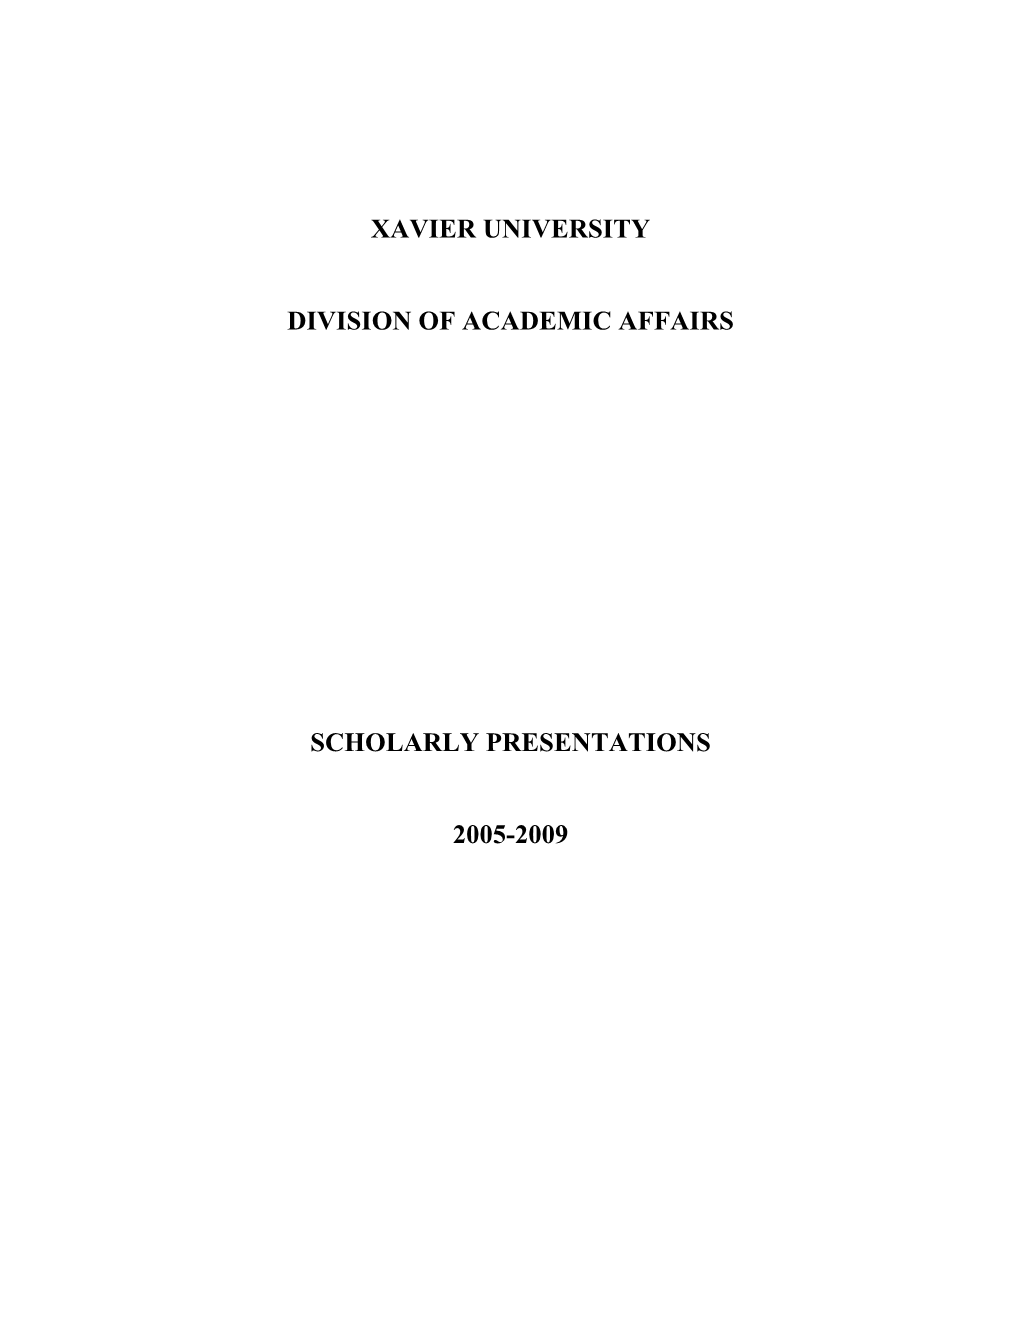 Xavier University Division of Academic Affairs Scholarly Presentations 2005